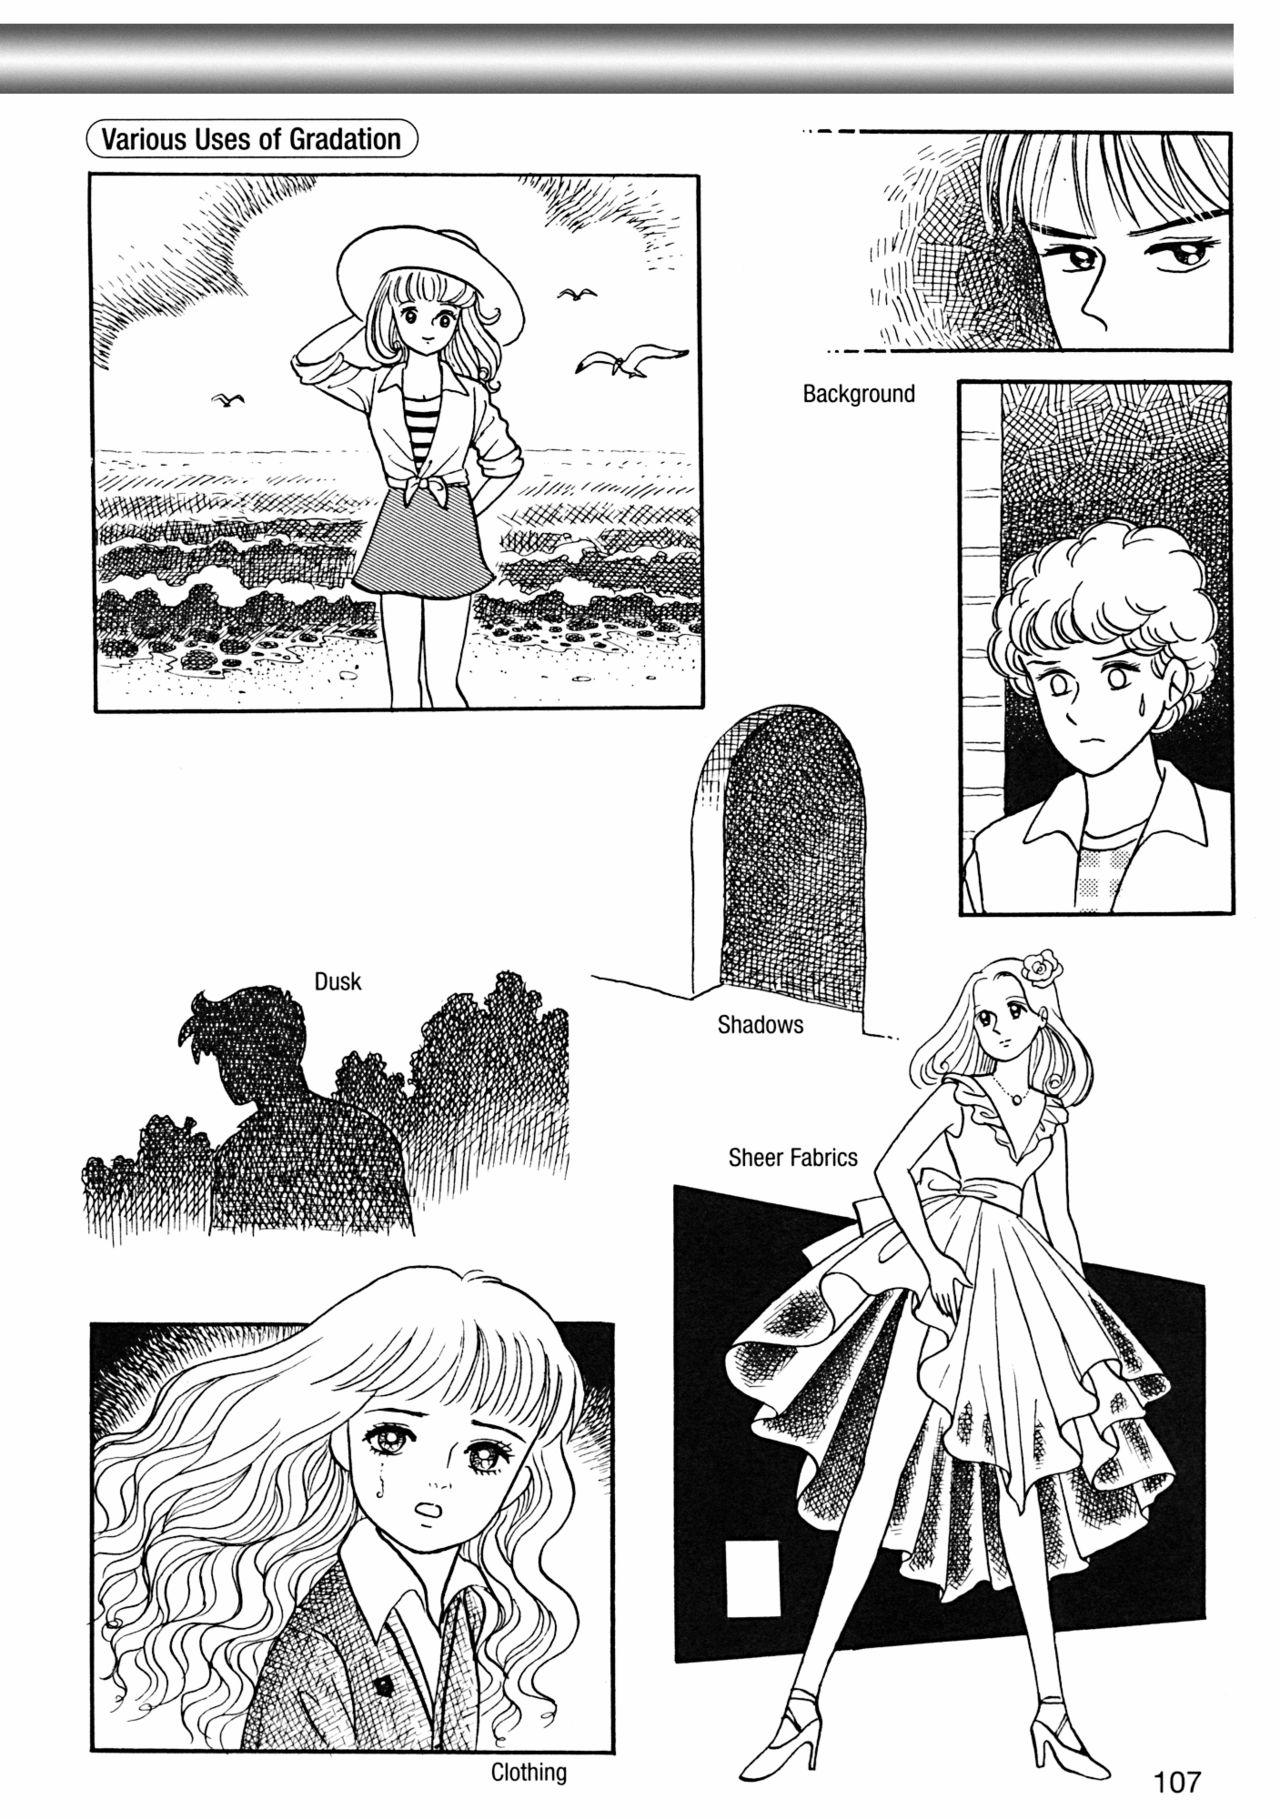 How to Draw Manga Vol. 8 - Super Basics by Angel Matsumoto 110